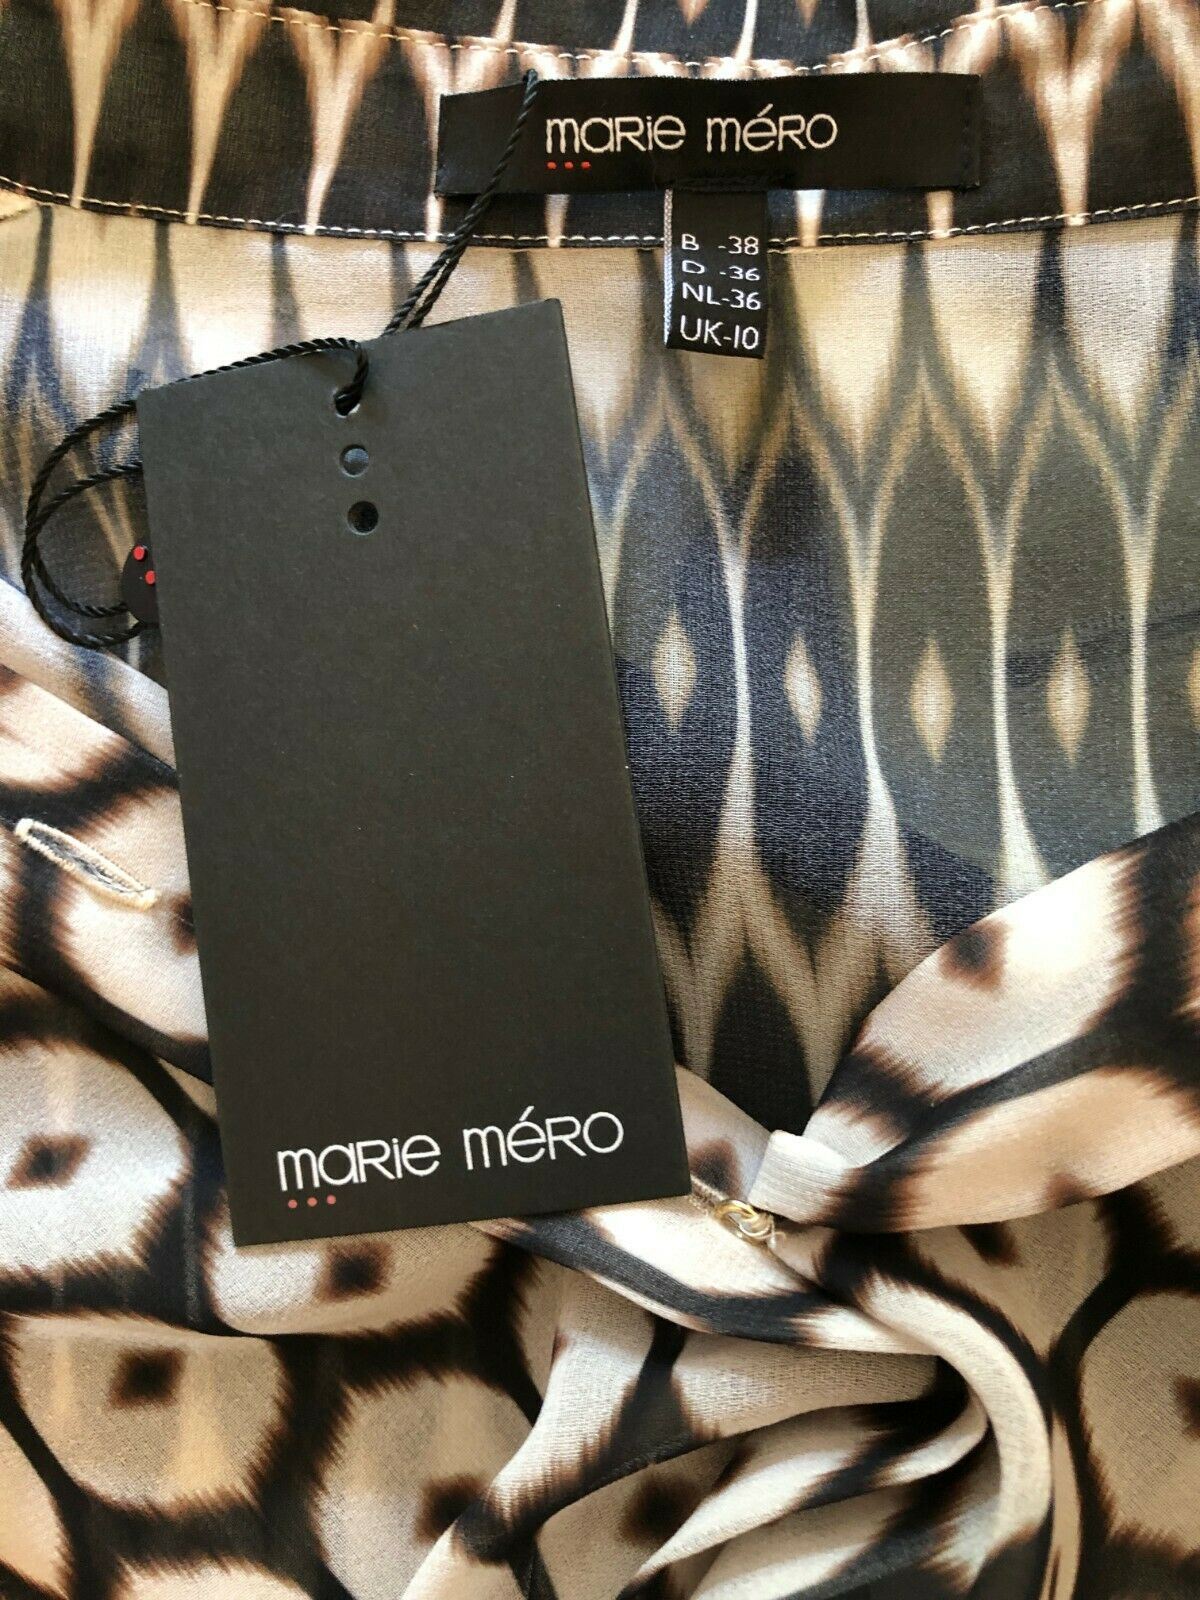 Marie Mero Brown Longline Chiffon Blouse UK 10 US 6 EU 38 BNWT RRP £135 Timeless Fashions